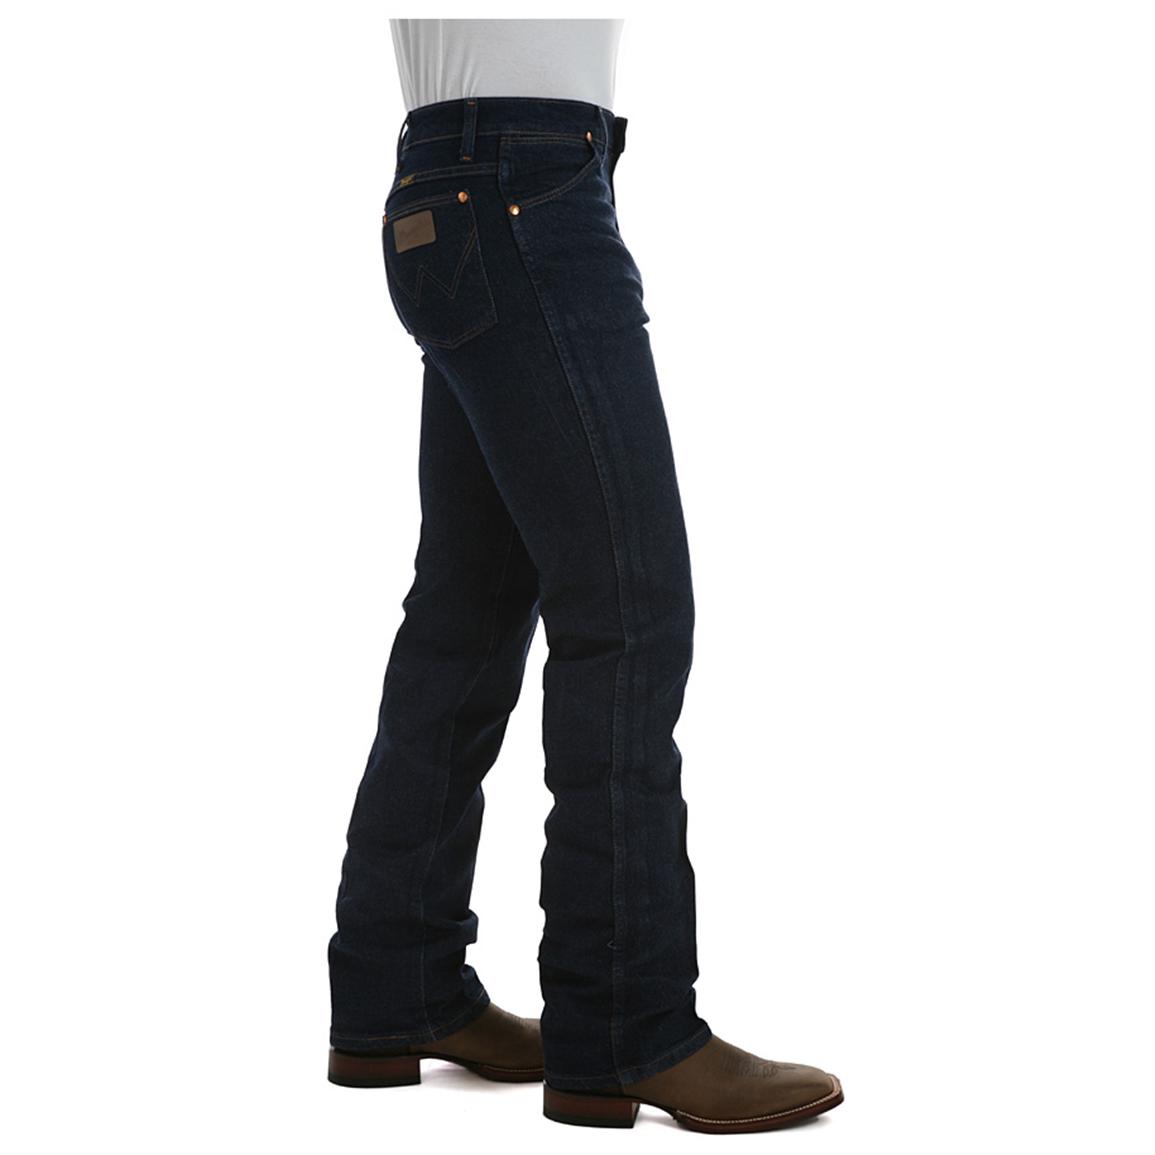 Men's Wrangler® Slim Fit Stretch Jeans - 226847, Jeans & Pants at ...